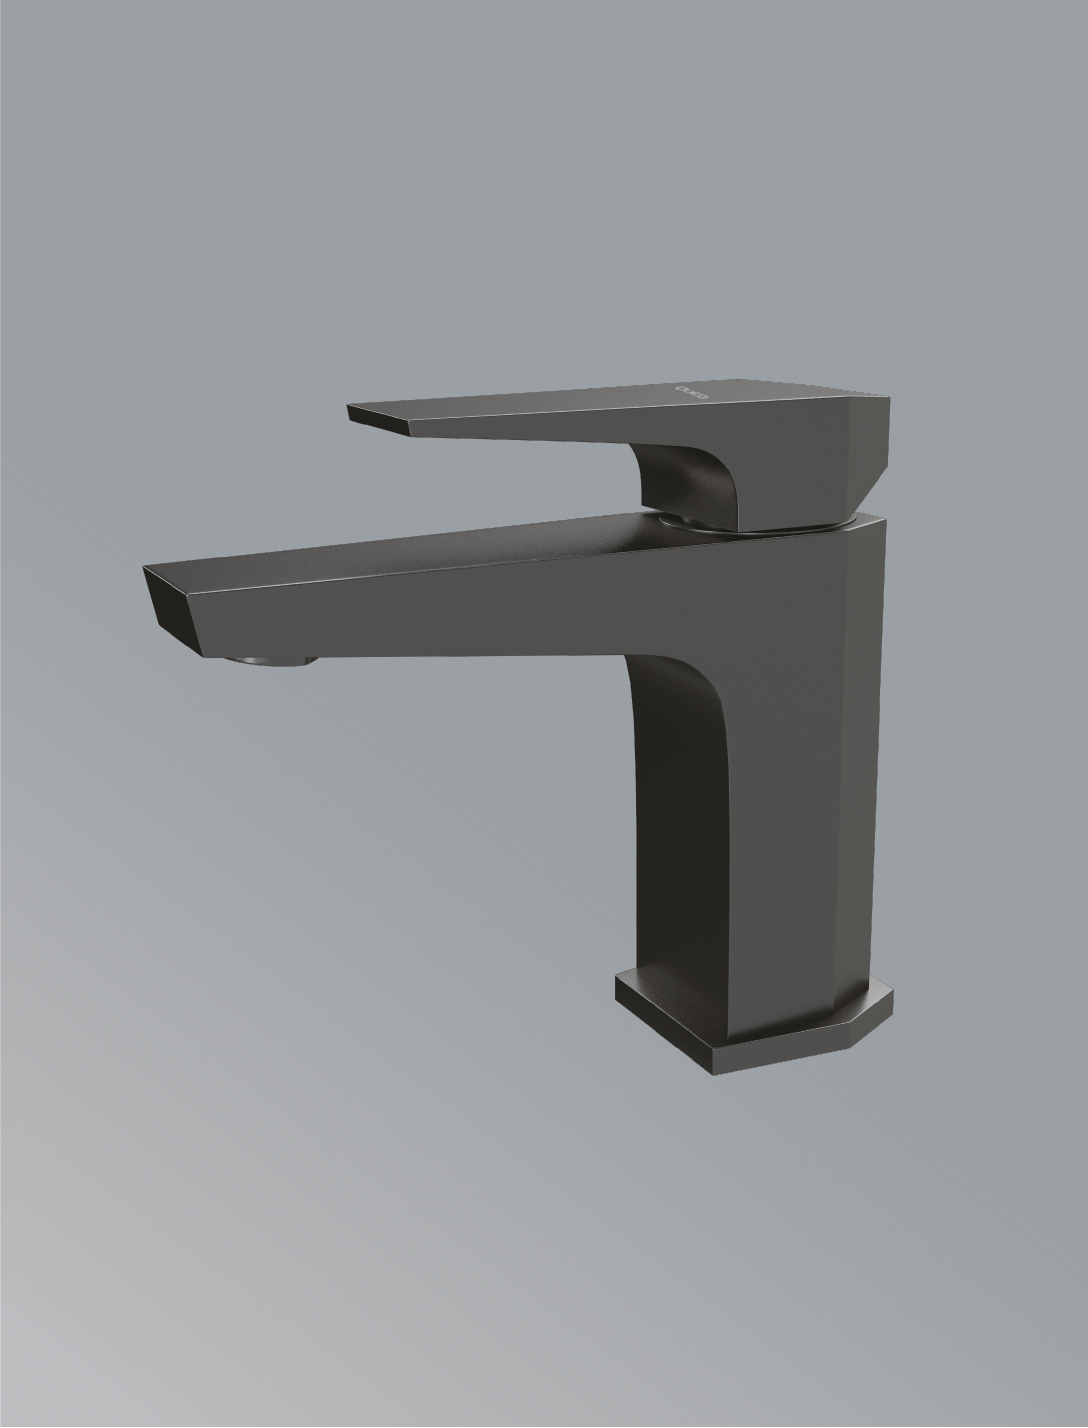  Single Control basin faucet in gun grey